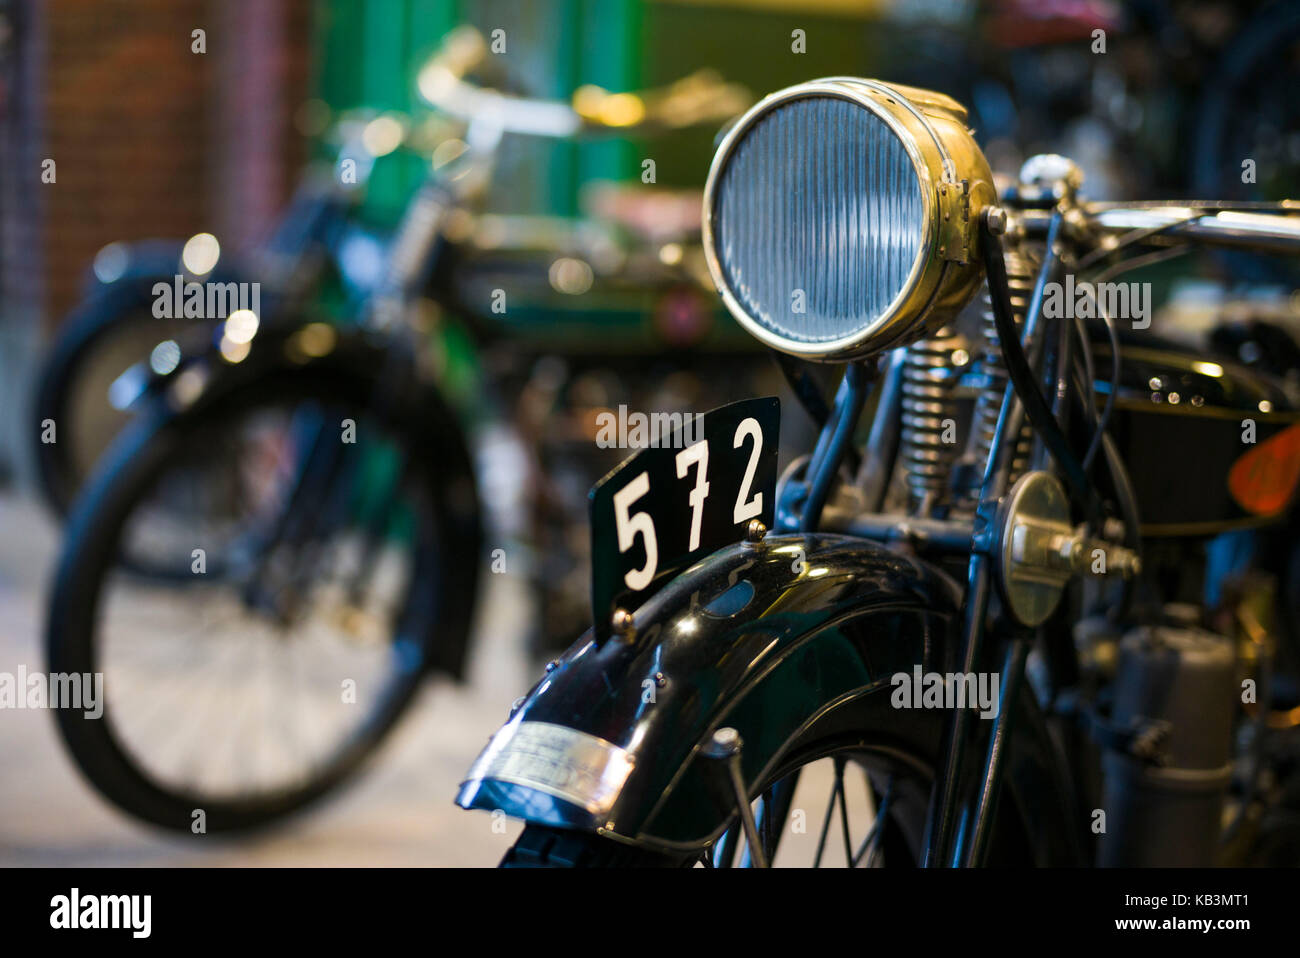 Belgisches motorrad -Fotos und -Bildmaterial in hoher Auflösung – Alamy